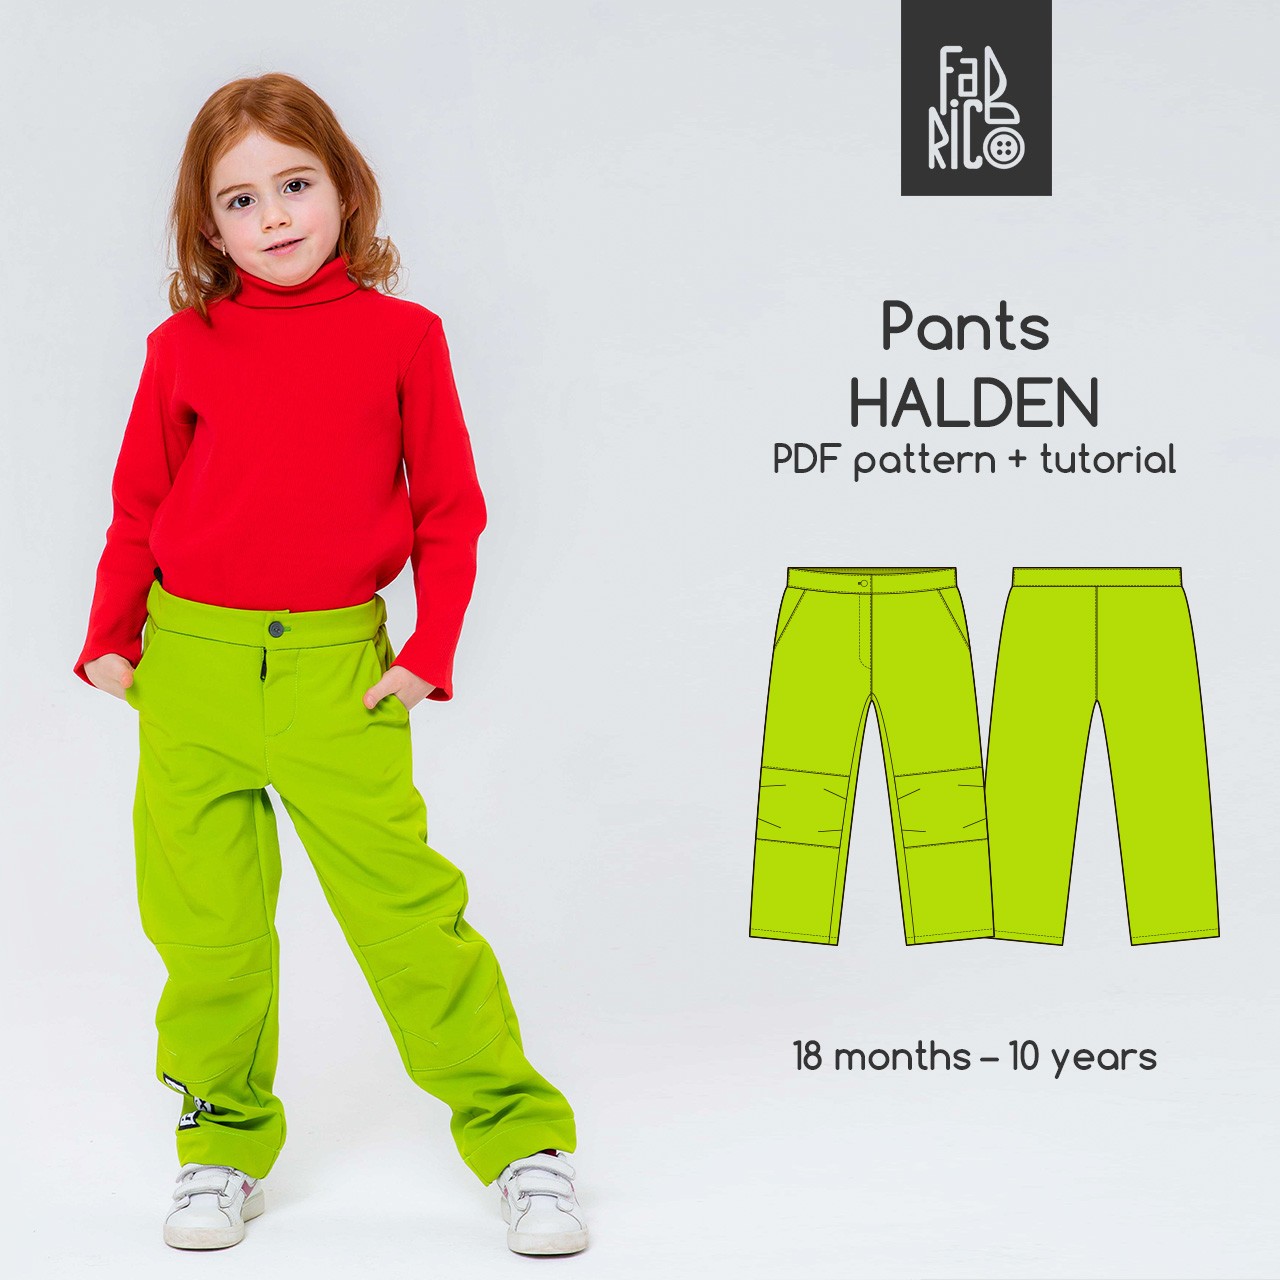 Outdoor rainproof child pants Halden sewing pattern - Fabrico